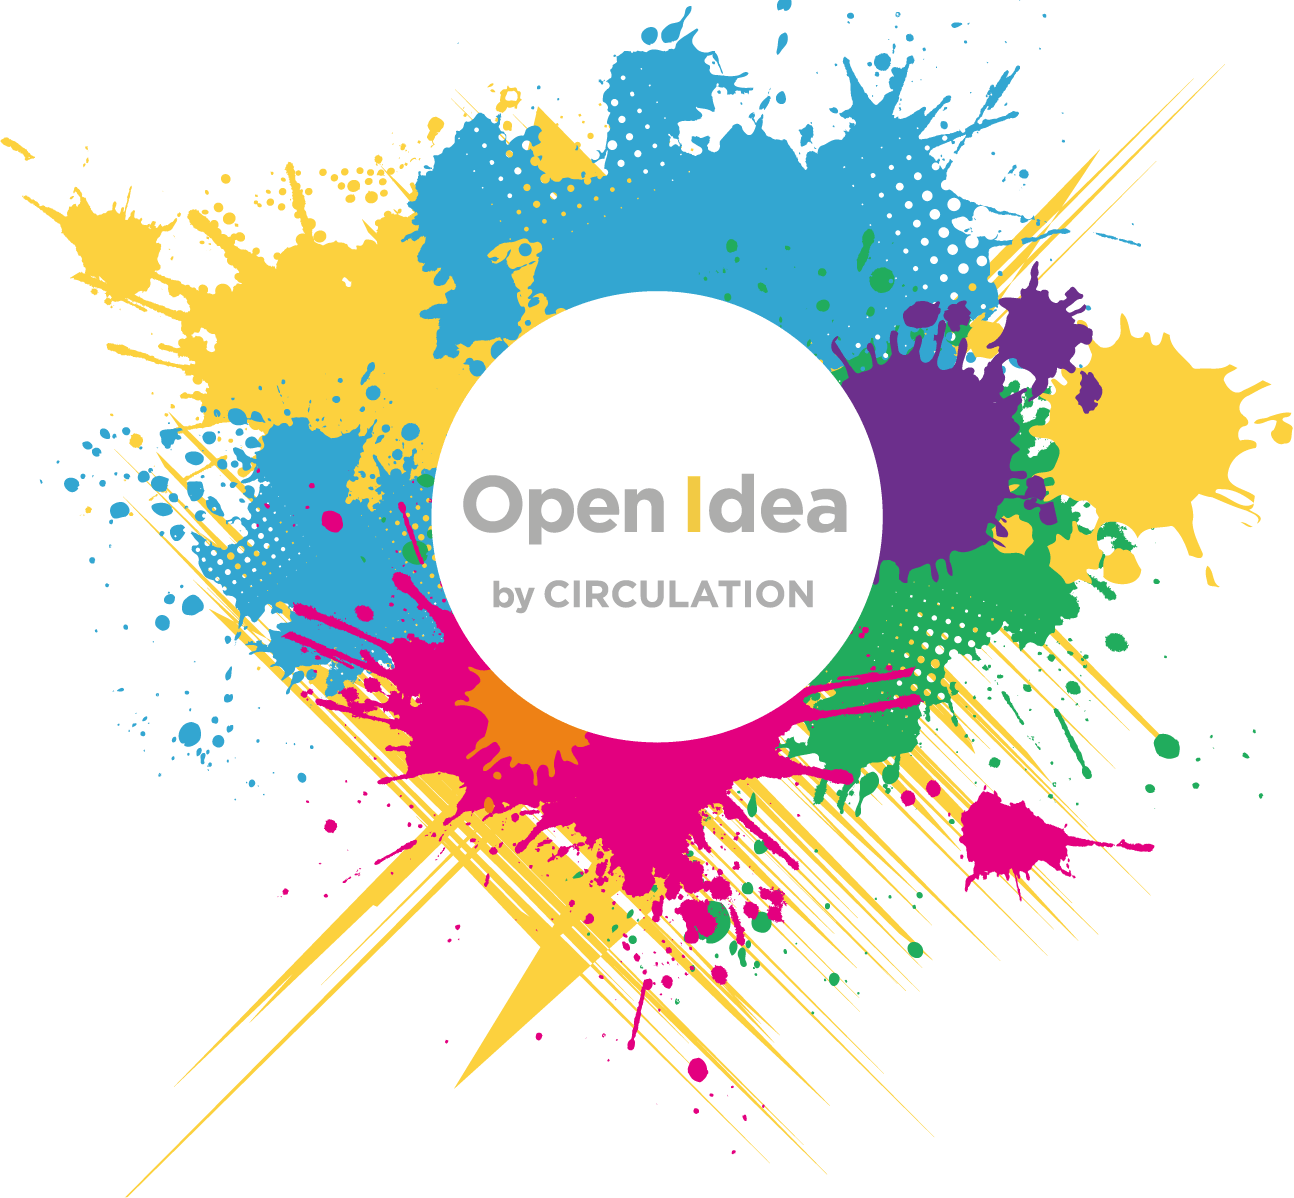 Open Idea by Circulation